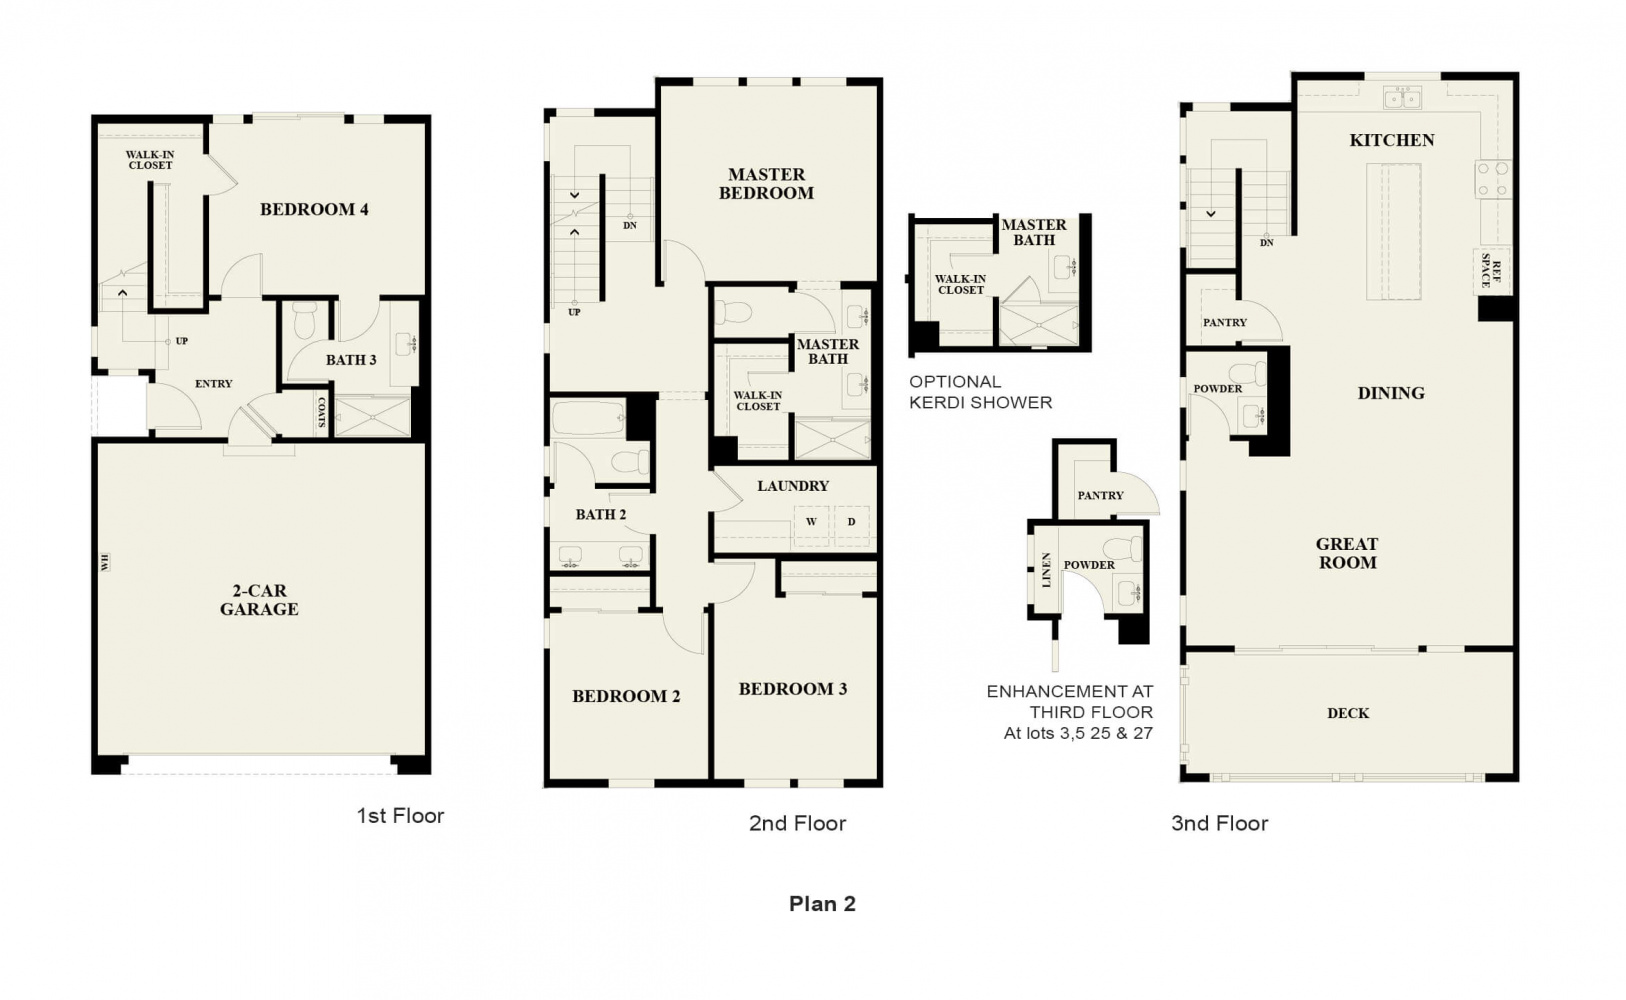 Plan 2 Floorplan of New Heights New Homes in West Hills